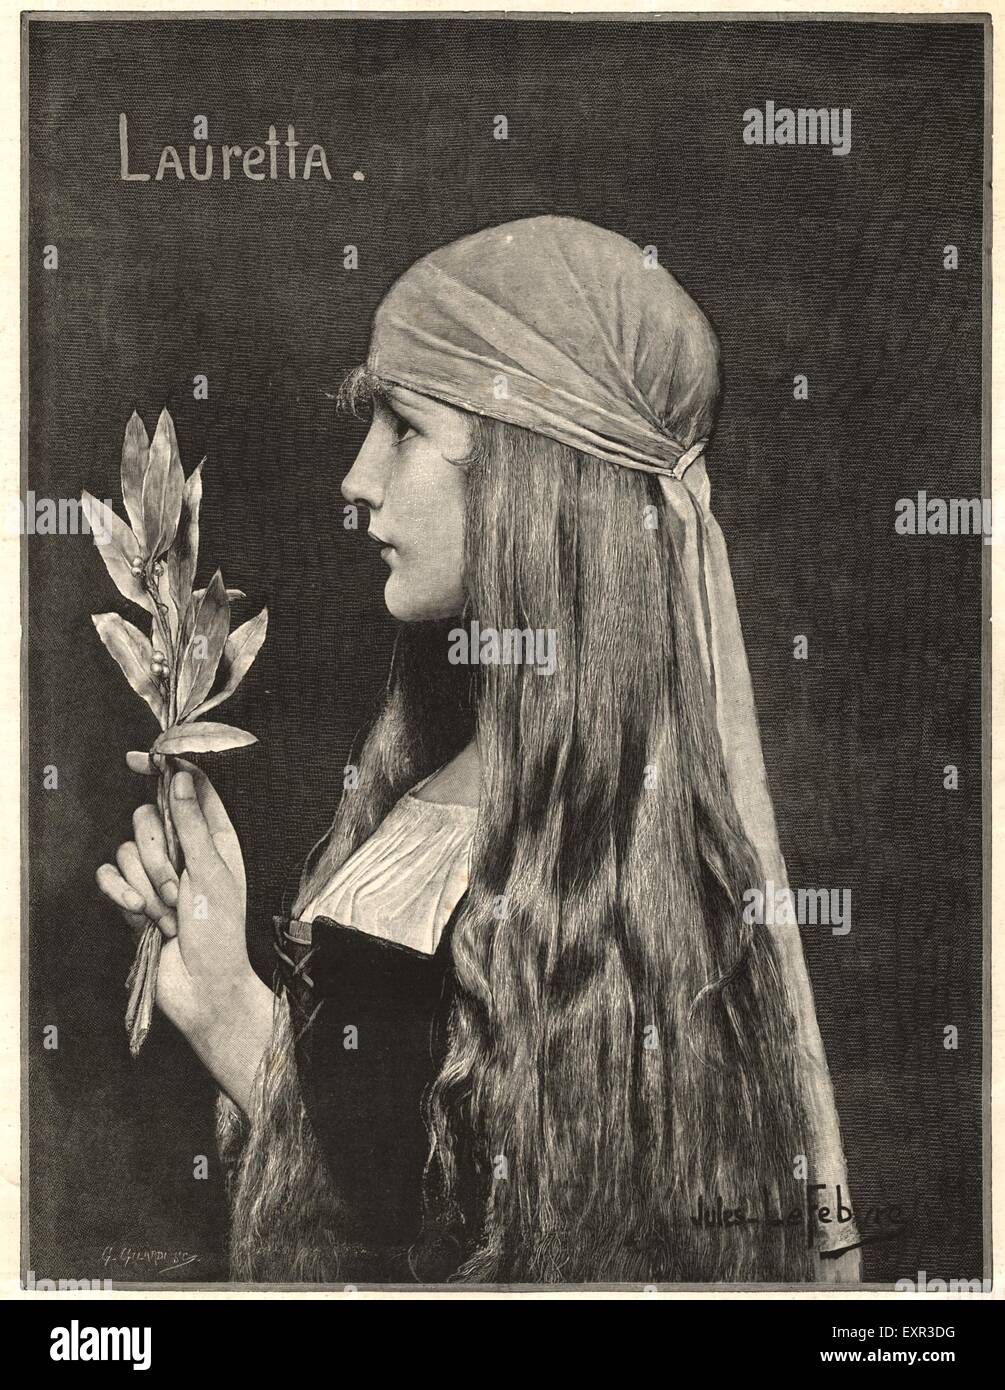 1890s UK Lauretta Poster Stock Photo